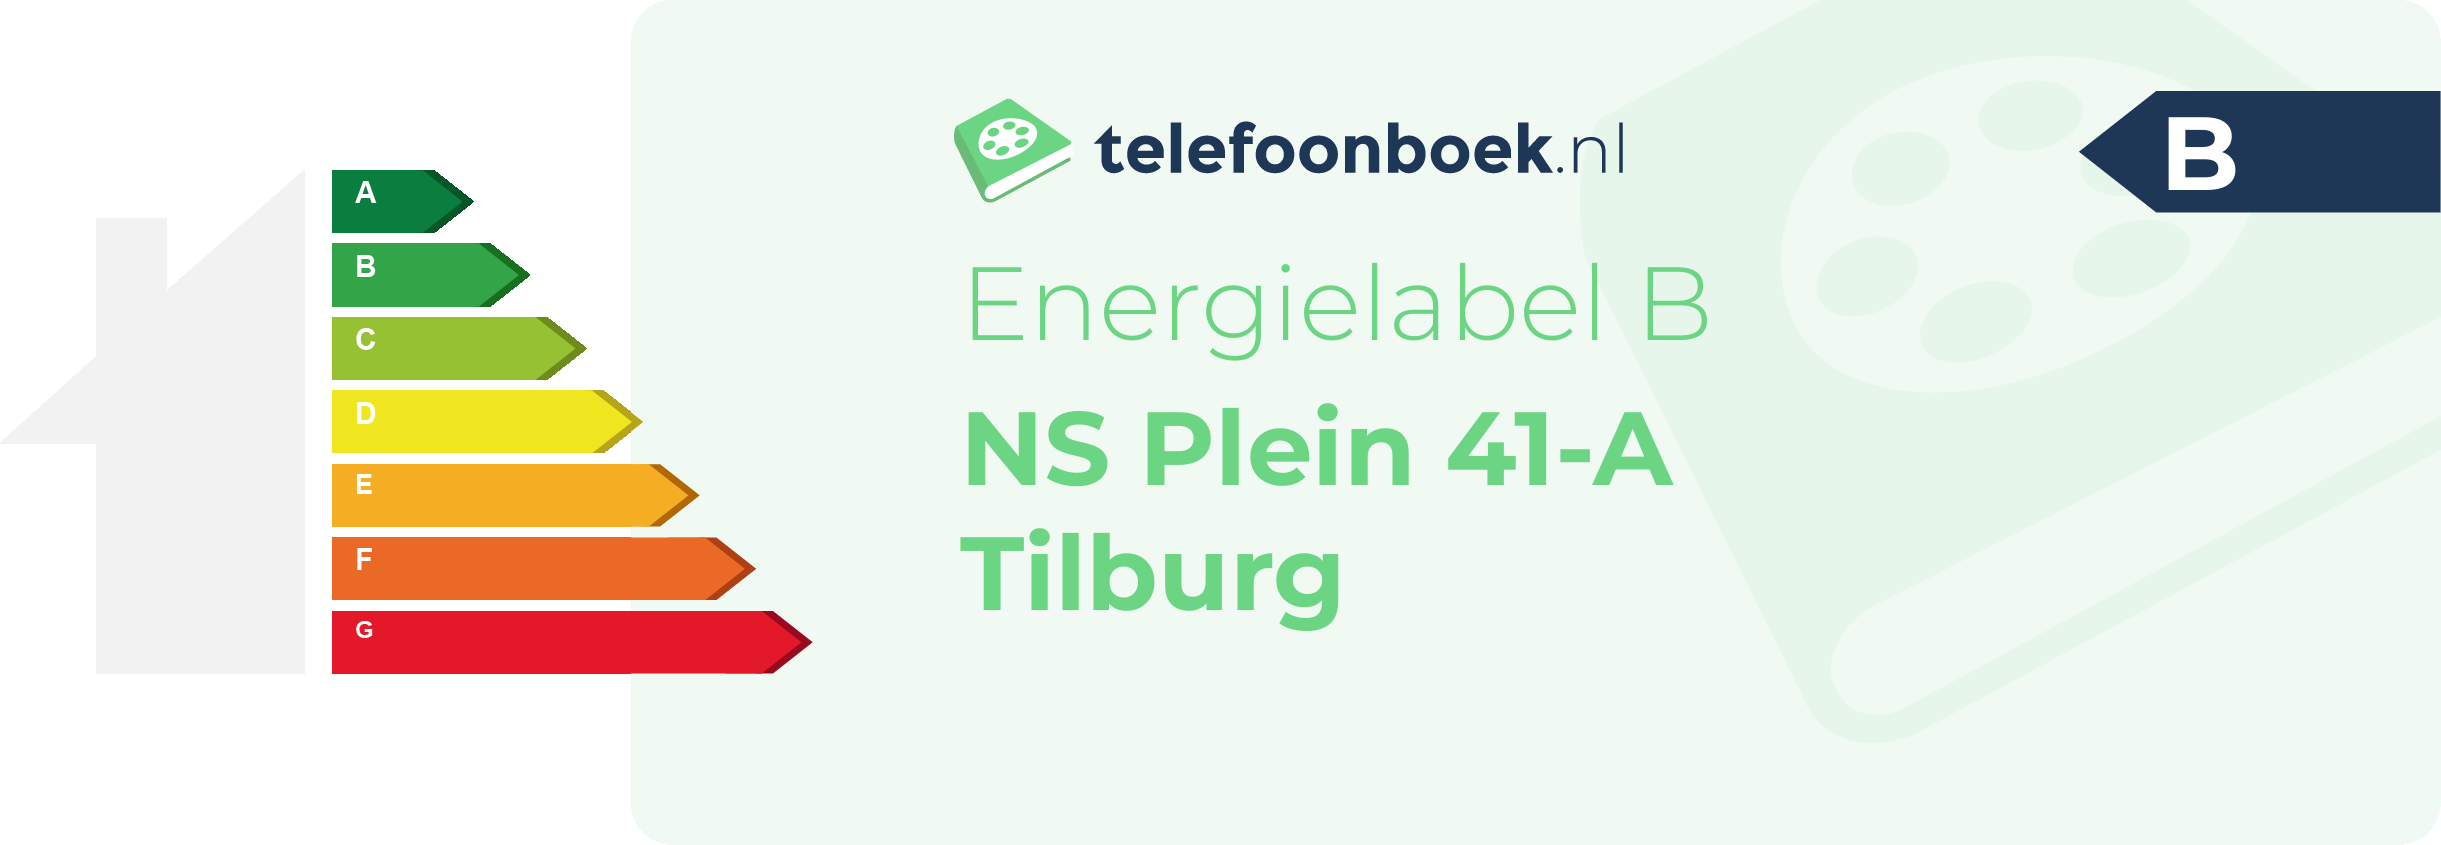 Energielabel NS Plein 41-A Tilburg